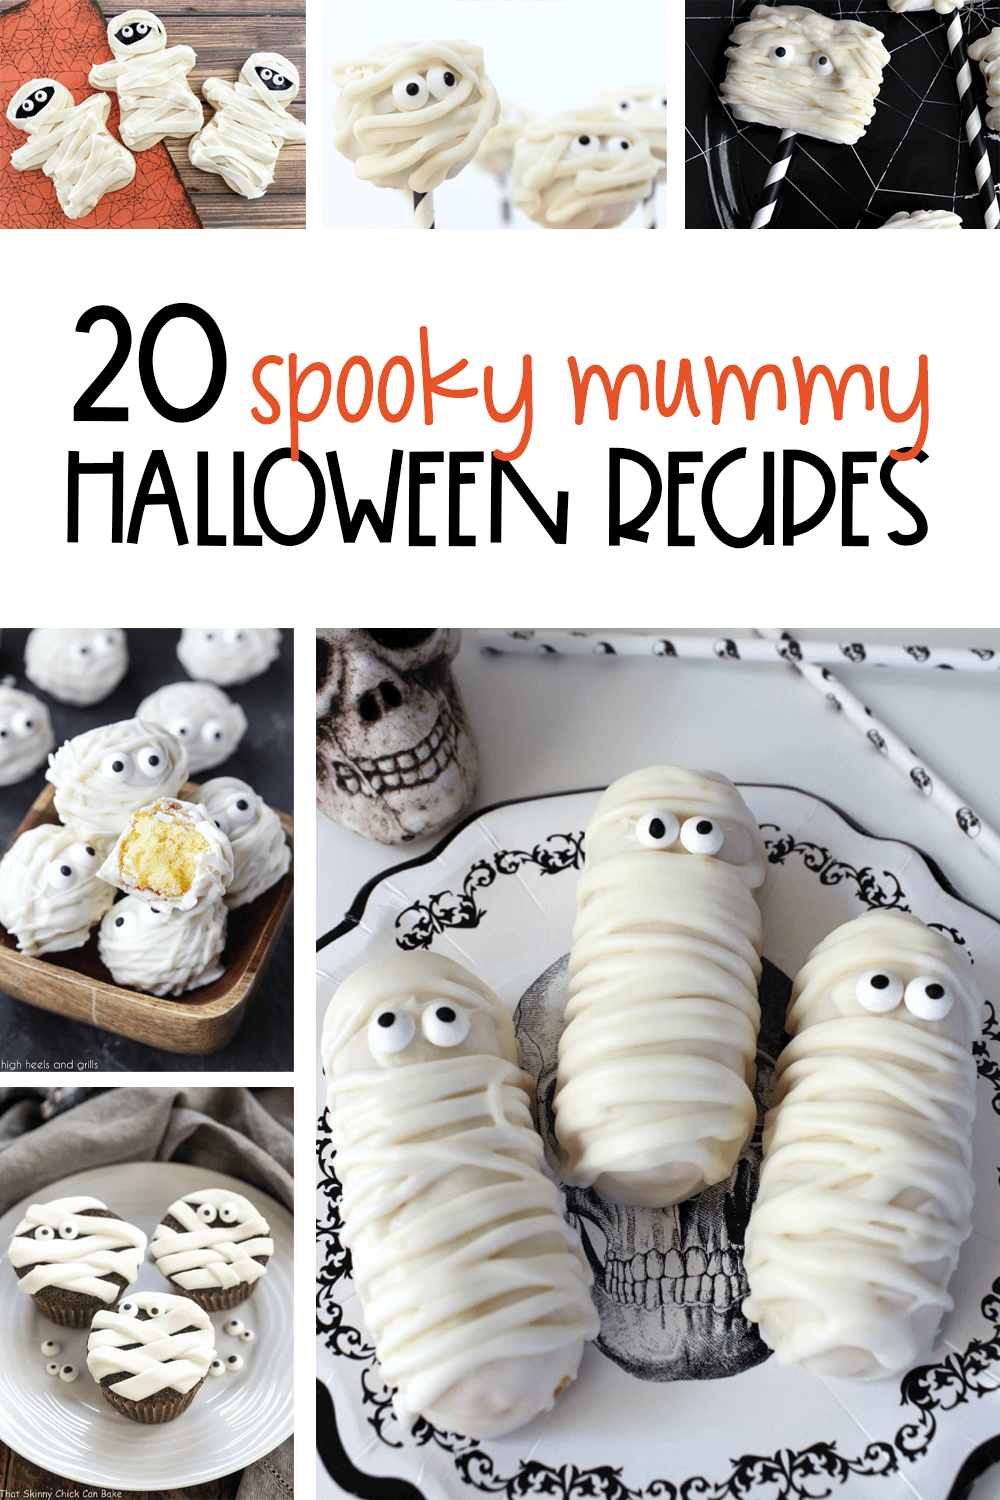 Halloween Mummy Recipes | Halloween Food | Decorative Halloween Recipes | Mummy Themed Recipes | Creative Mummy Recipes | #food #halloween #recipes #mummy #easy #creative #uniquegifter